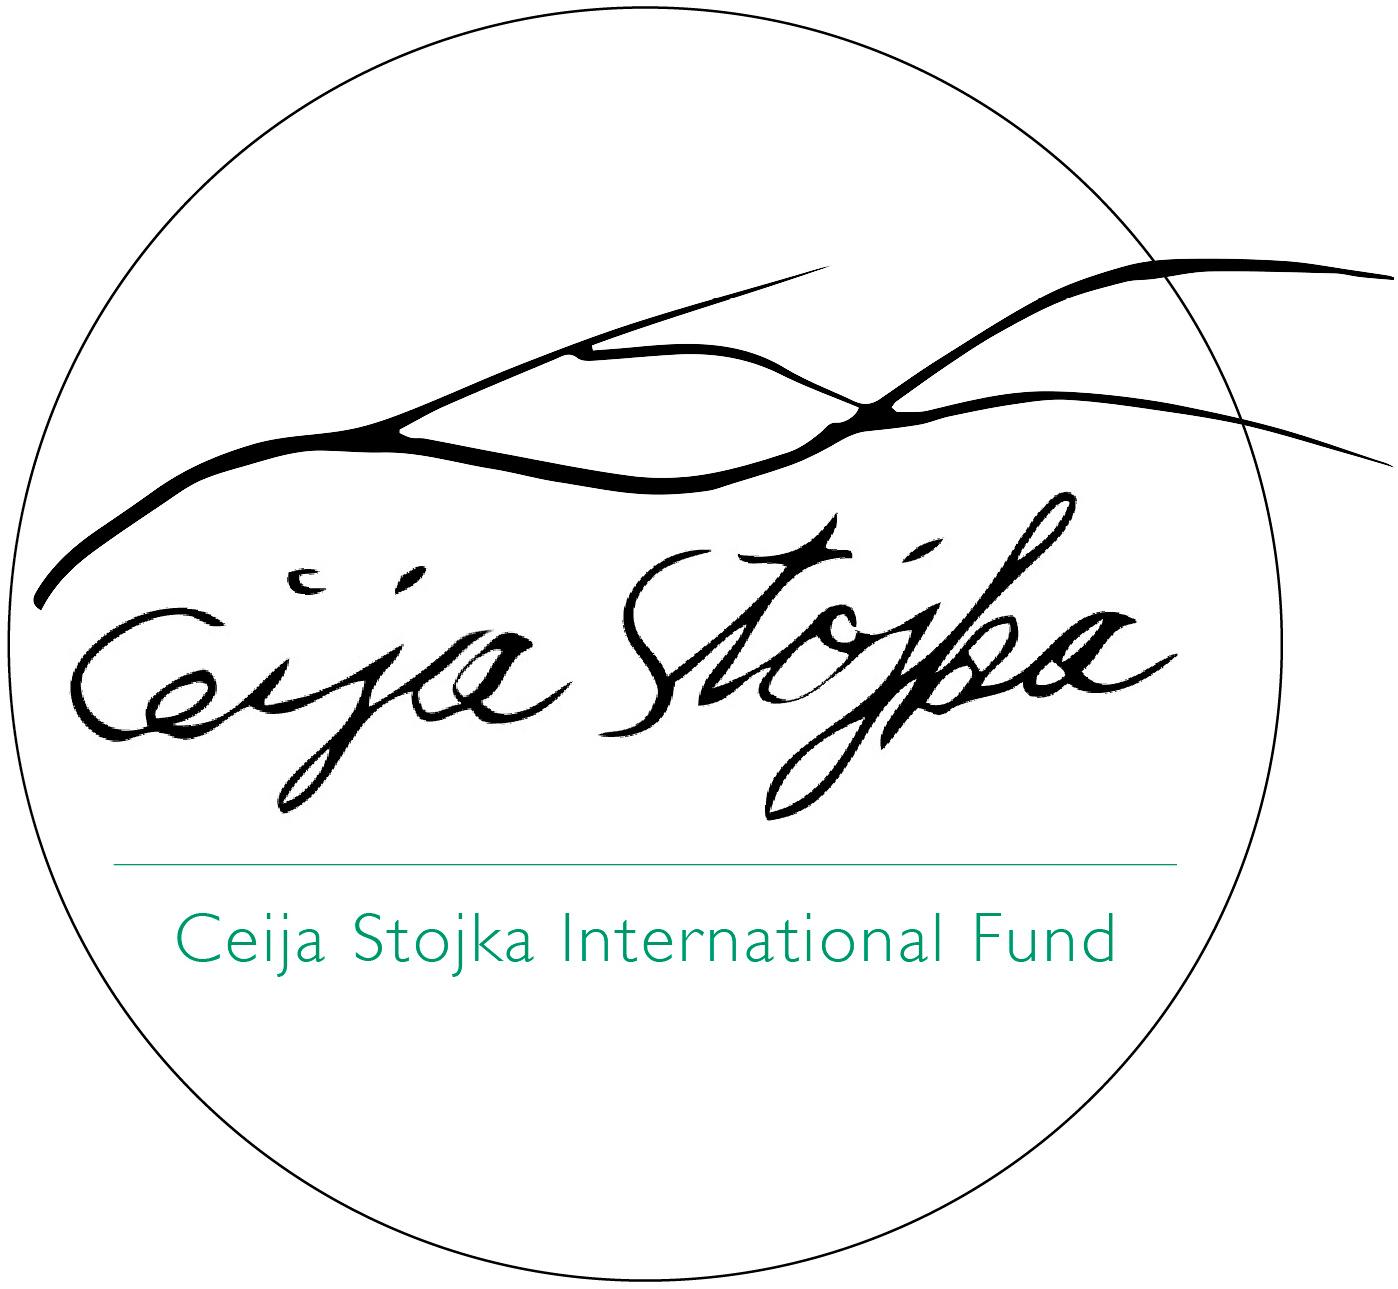 Ceija Stojka International Fund